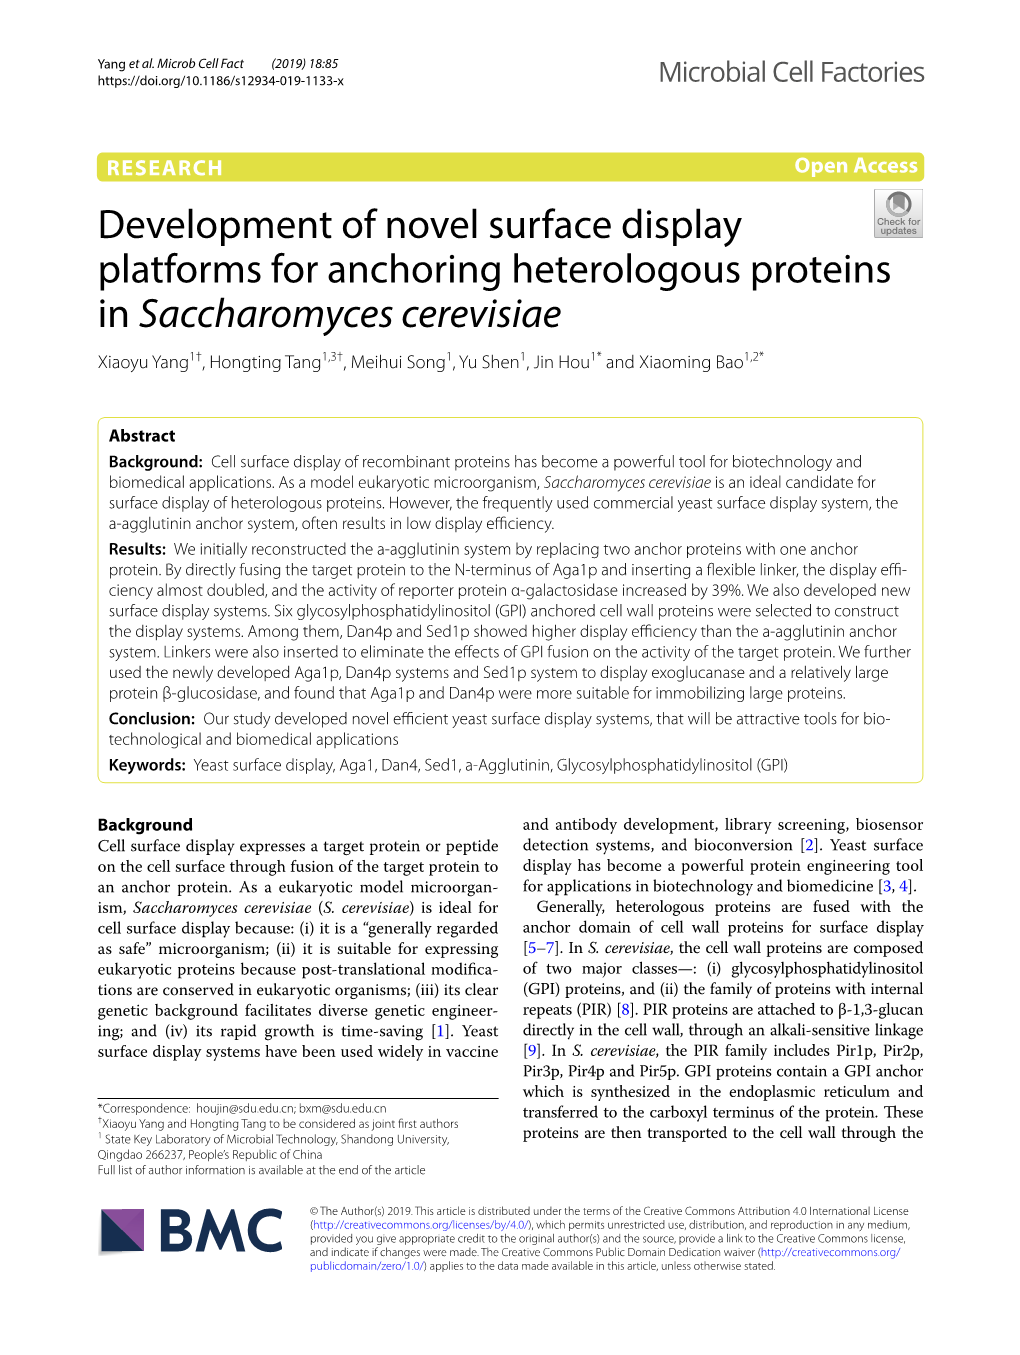 Development of Novel Surface Display Platforms for Anchoring